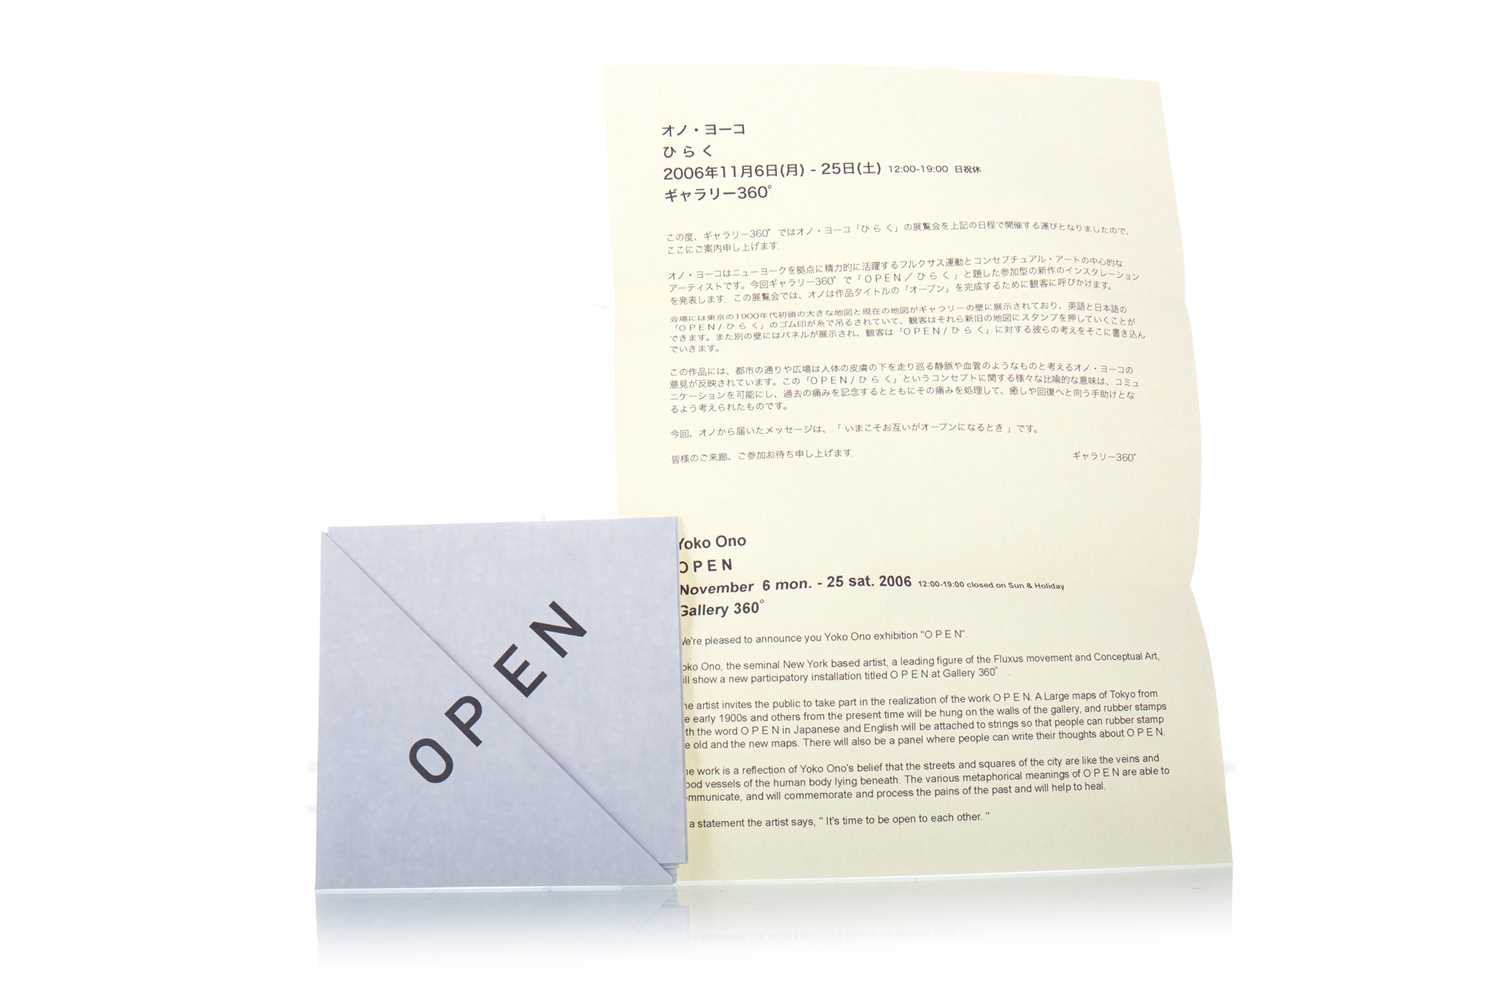 YOKO ONO, 'OPEN' MAP, GALLERY 360, 2006